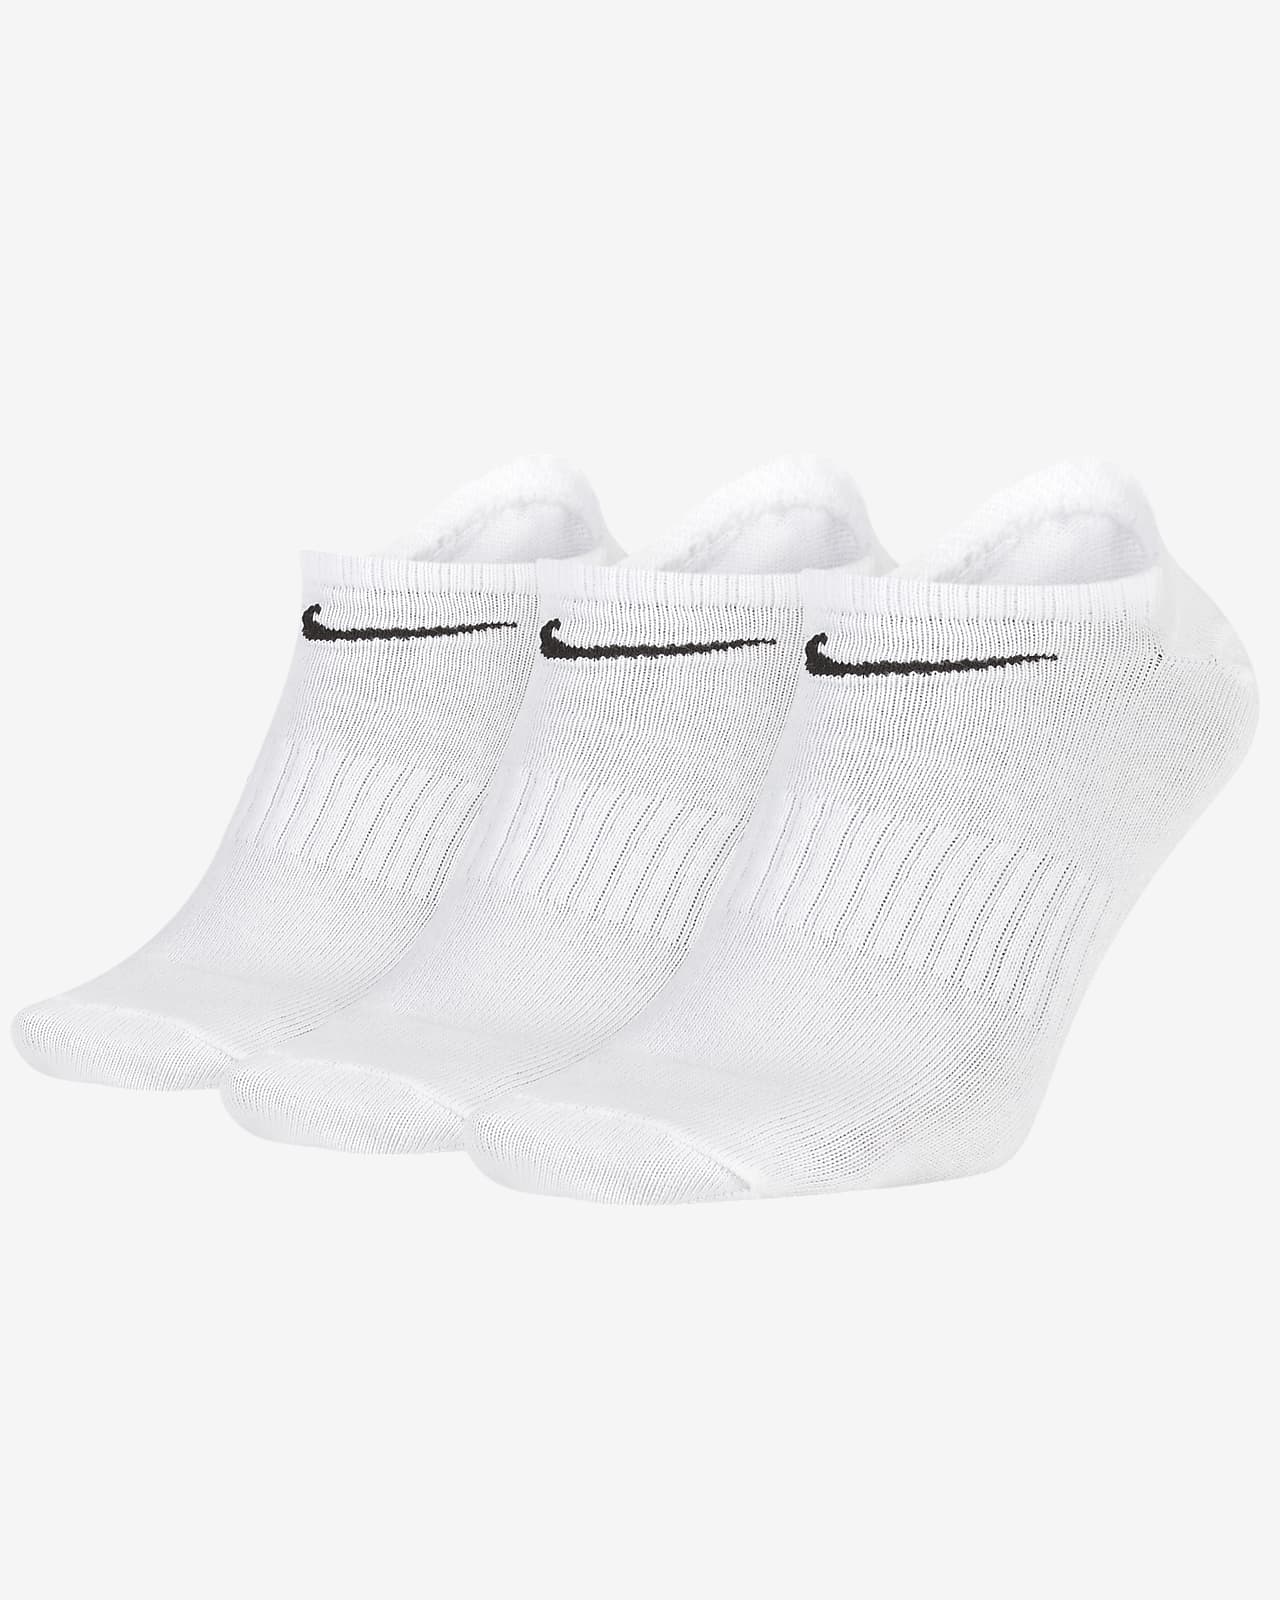 Nike Everyday Lightweight Training No-Show Socks (3 Pairs)